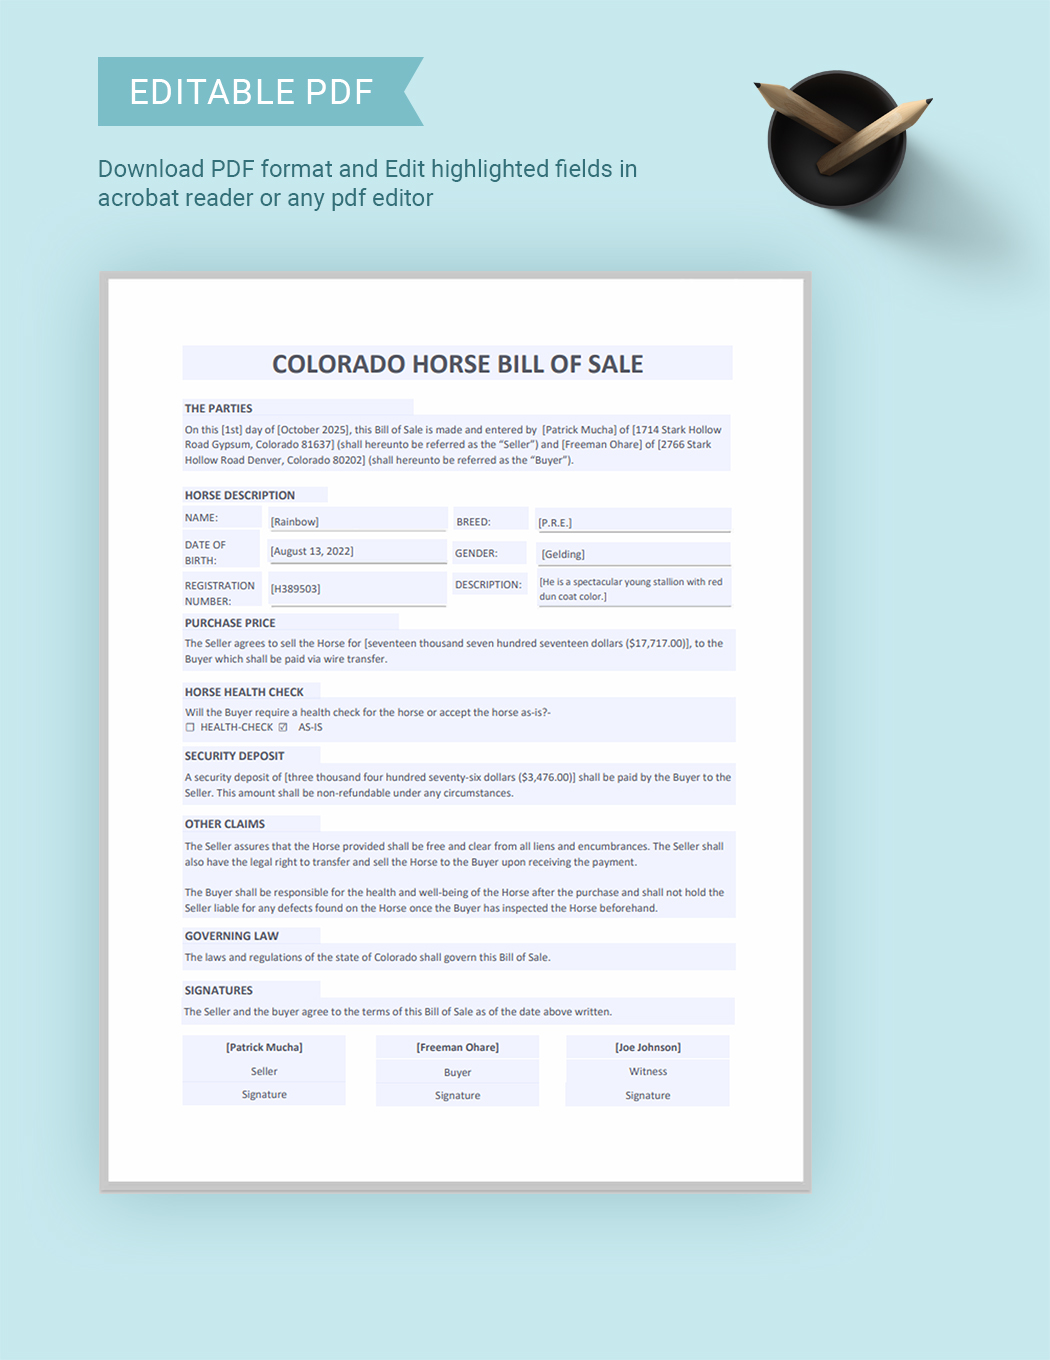 Colorado Horse Bill of Sale Template